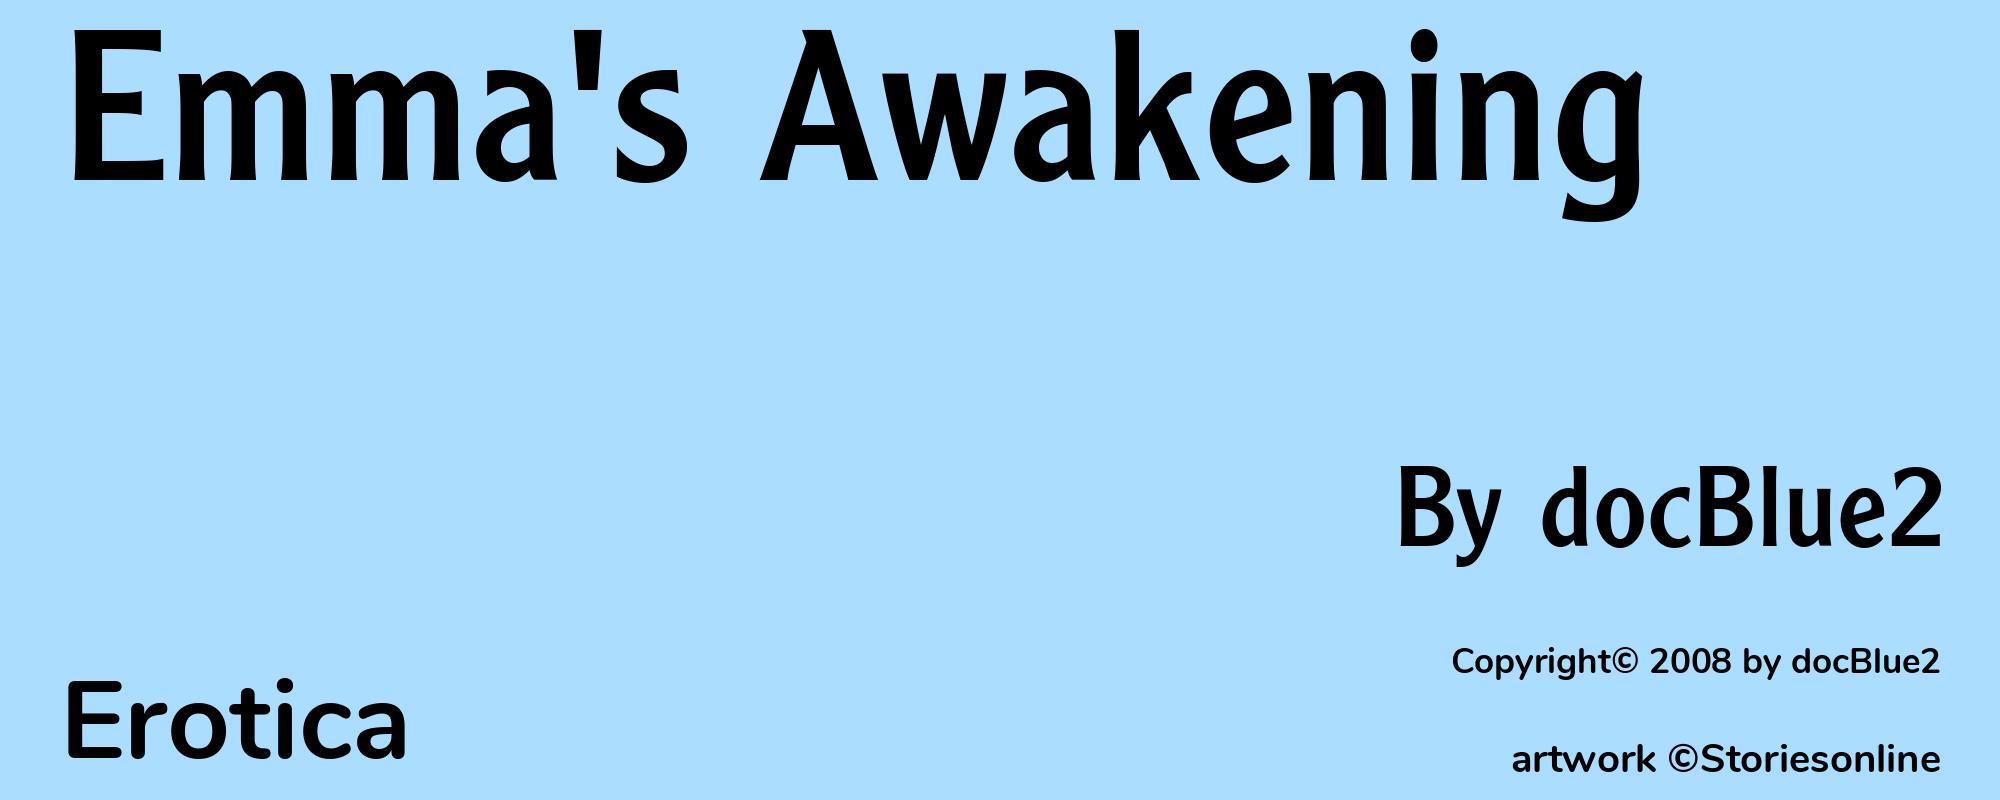 Emma's Awakening - Cover